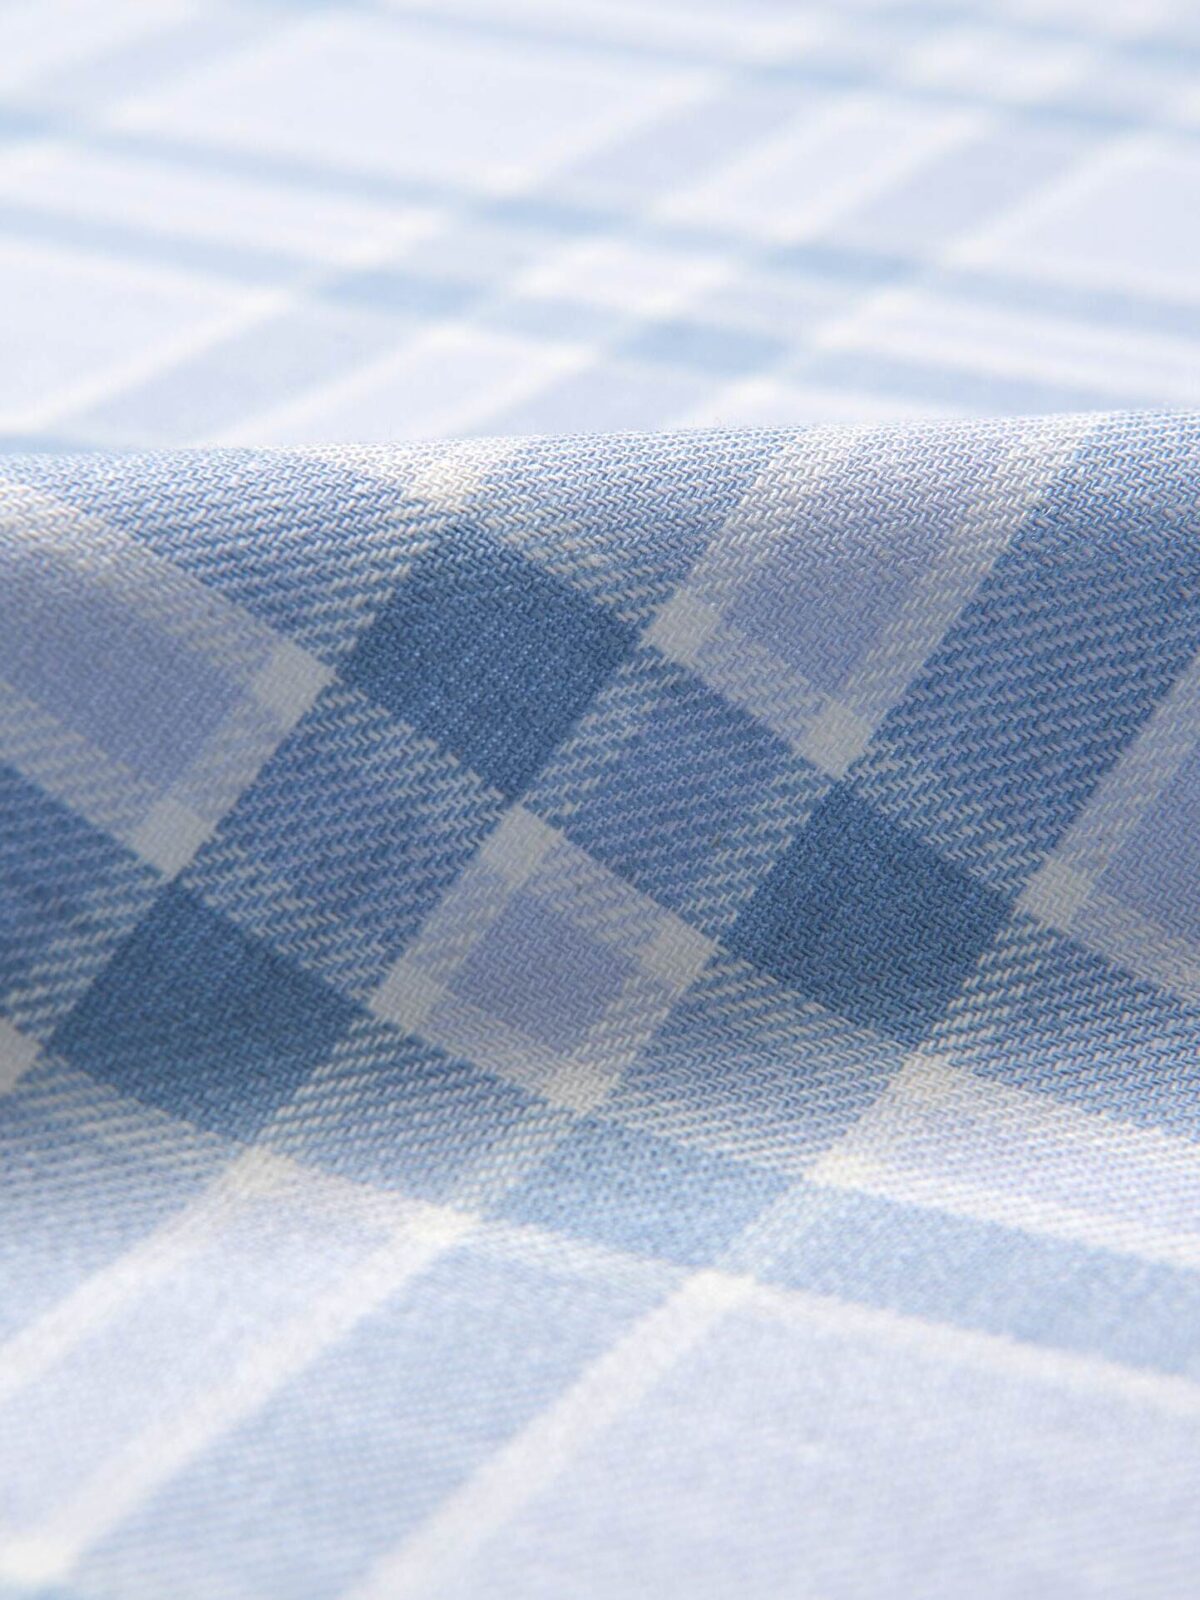 U02: Royal Blue & Black Organic Flannel Plaid, 100% Cotton, 44 wide. $8.99  per half yard.